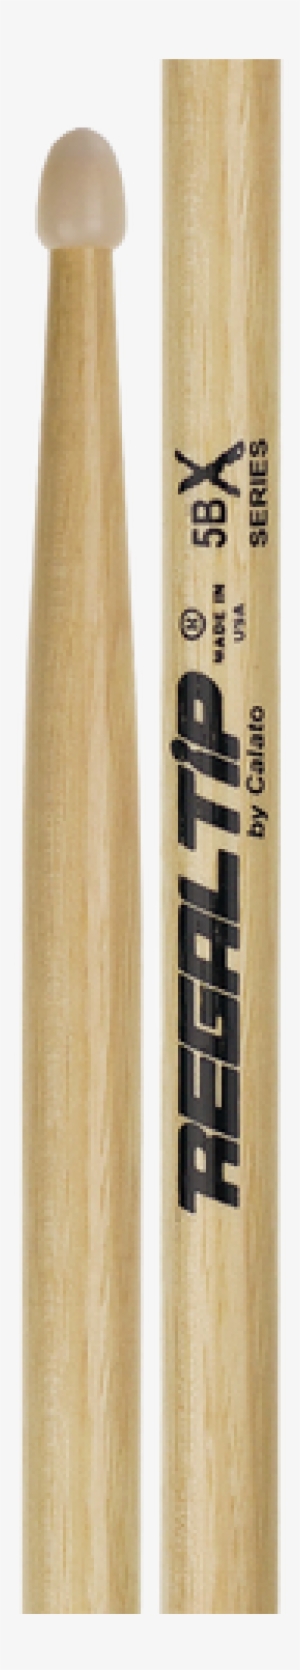 Regal Tip Extra Long Series 5b Nylon Tip Drum Sticks - Regal Tip 5a Maple